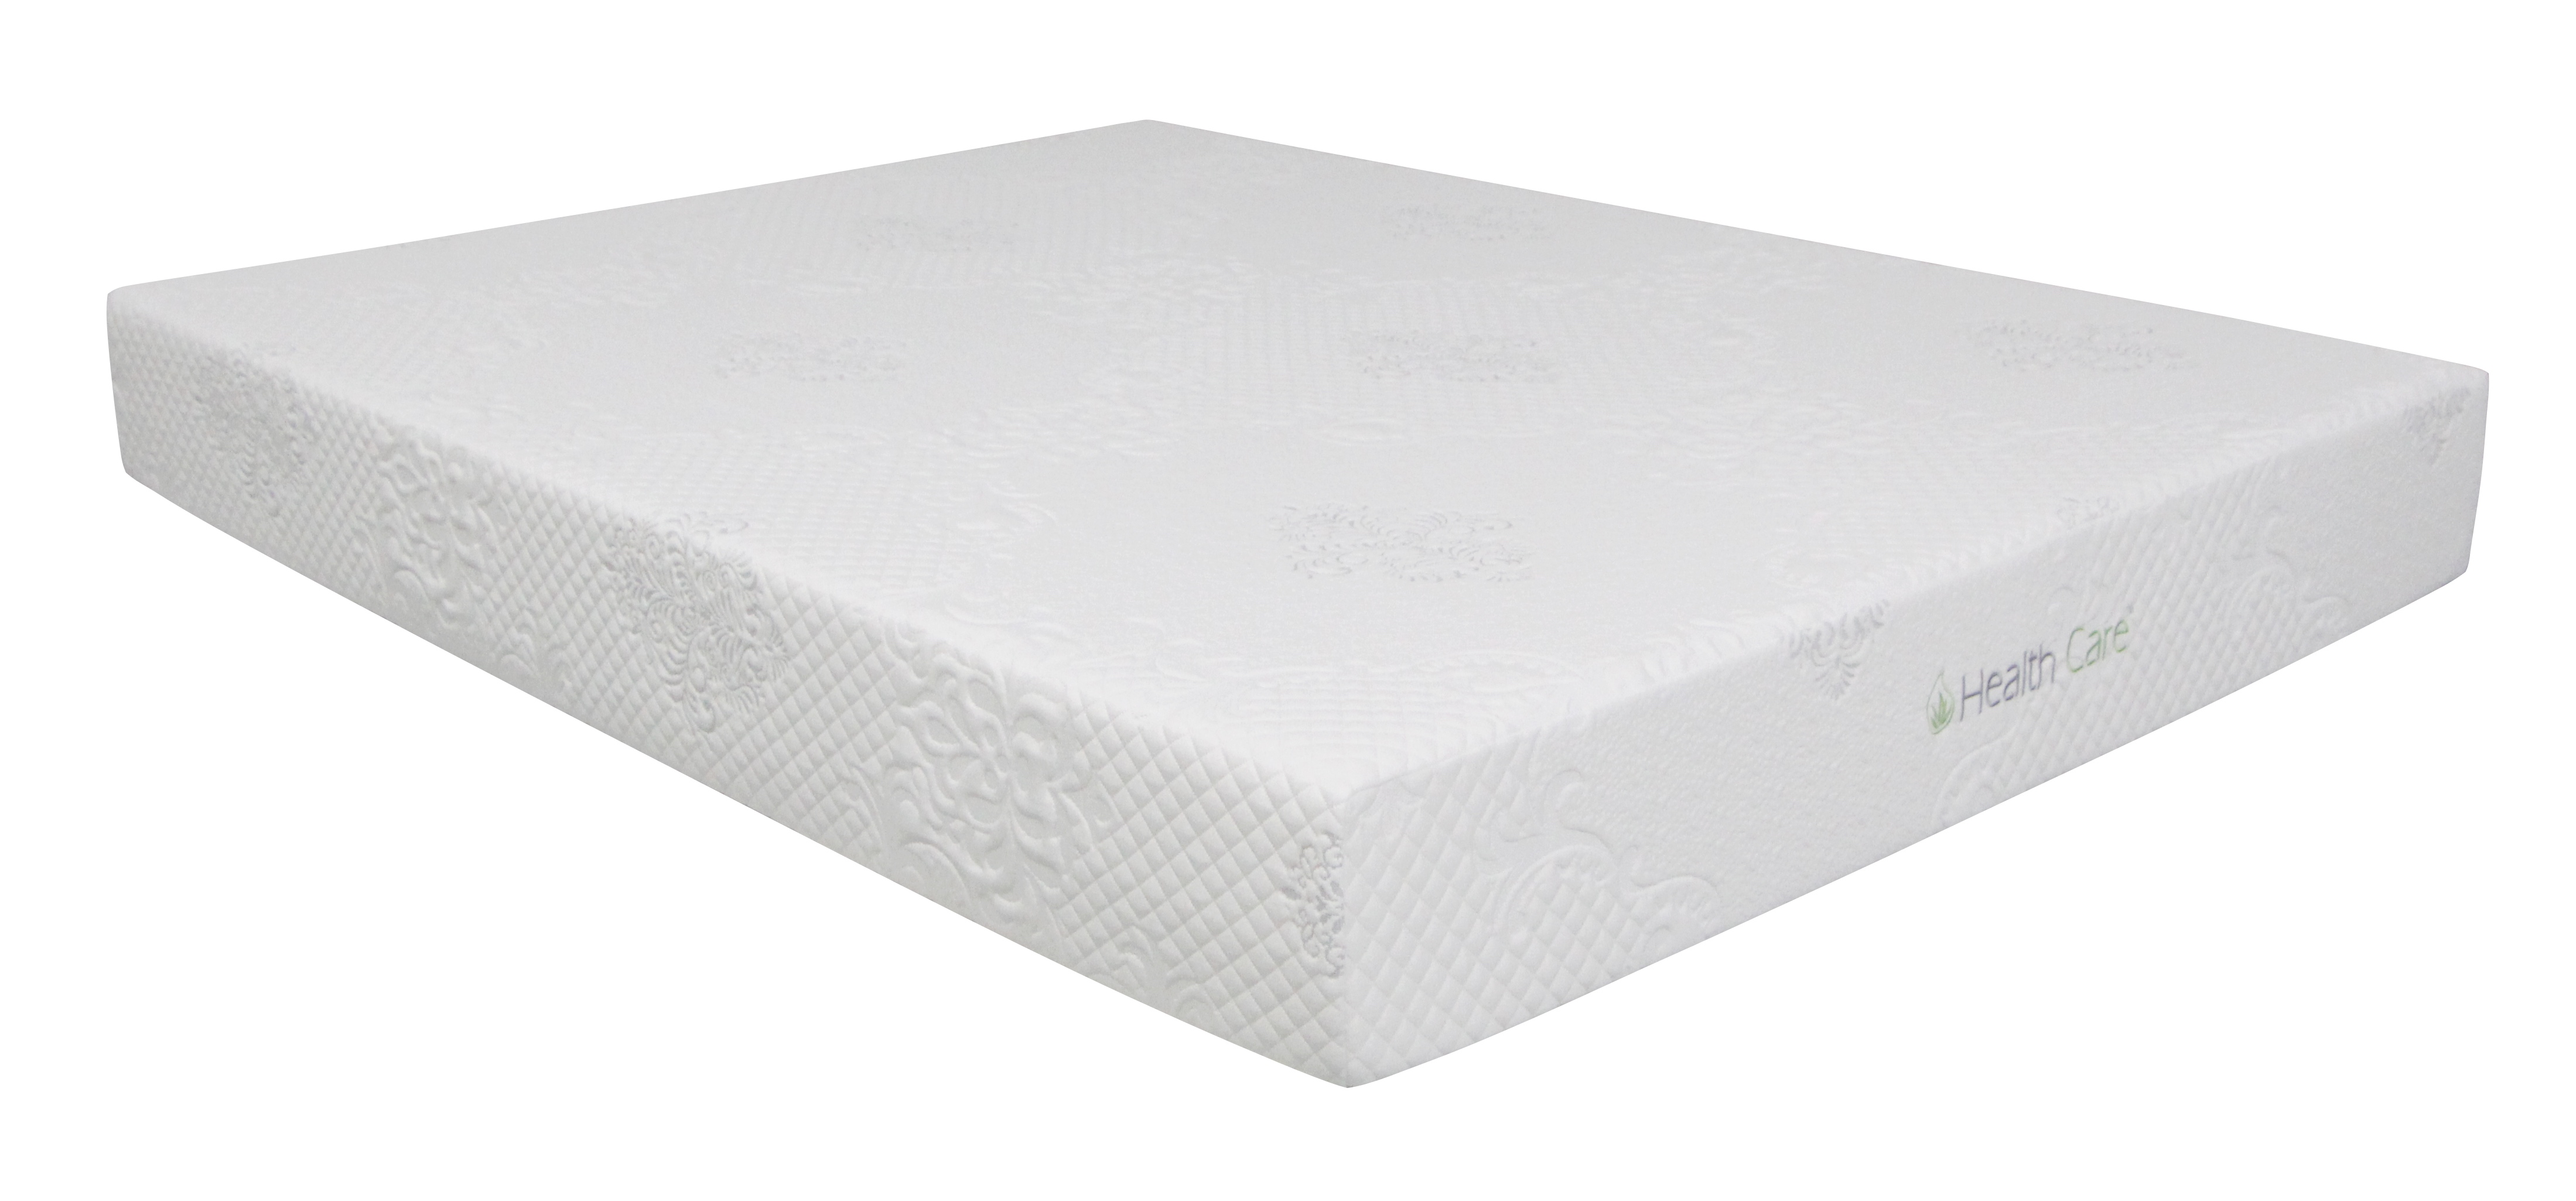 memory foam home health care mattress review